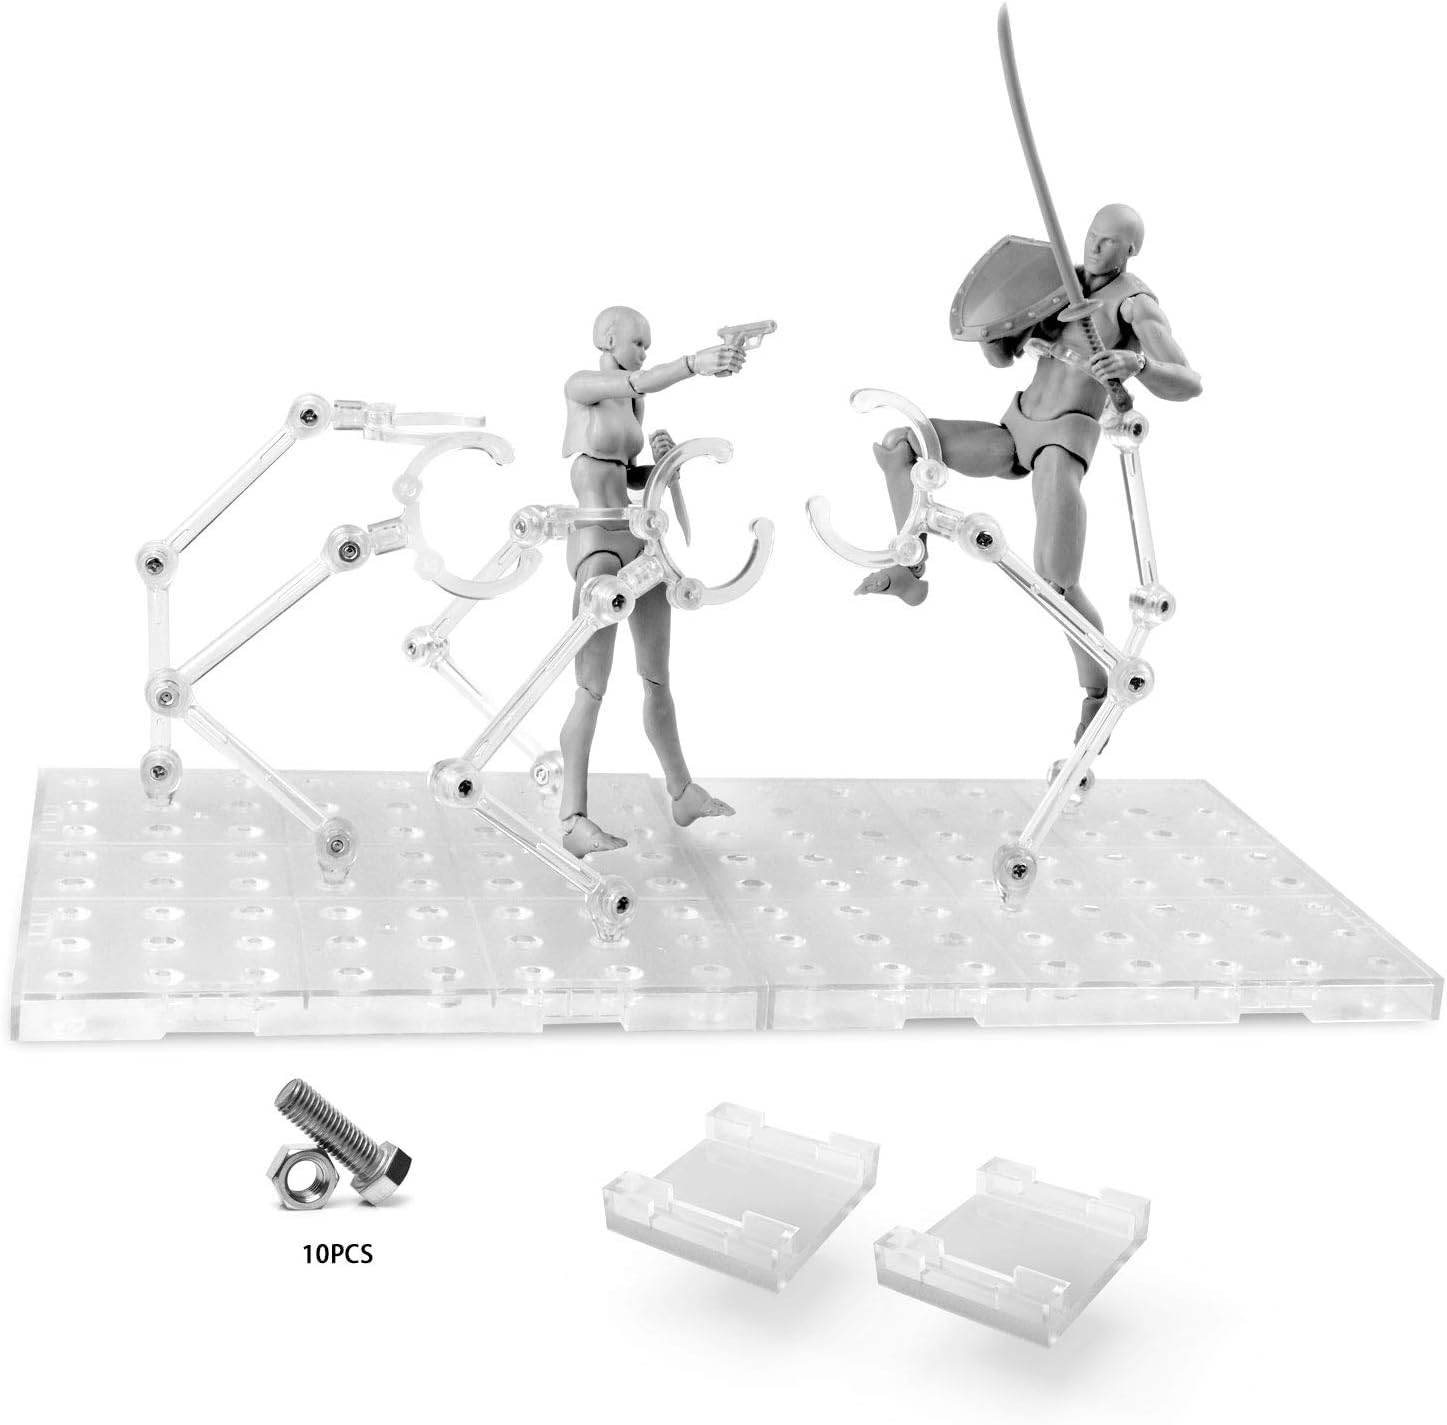 Linhoo Action Figure Stand, 6in1 Action Figure Display [...]